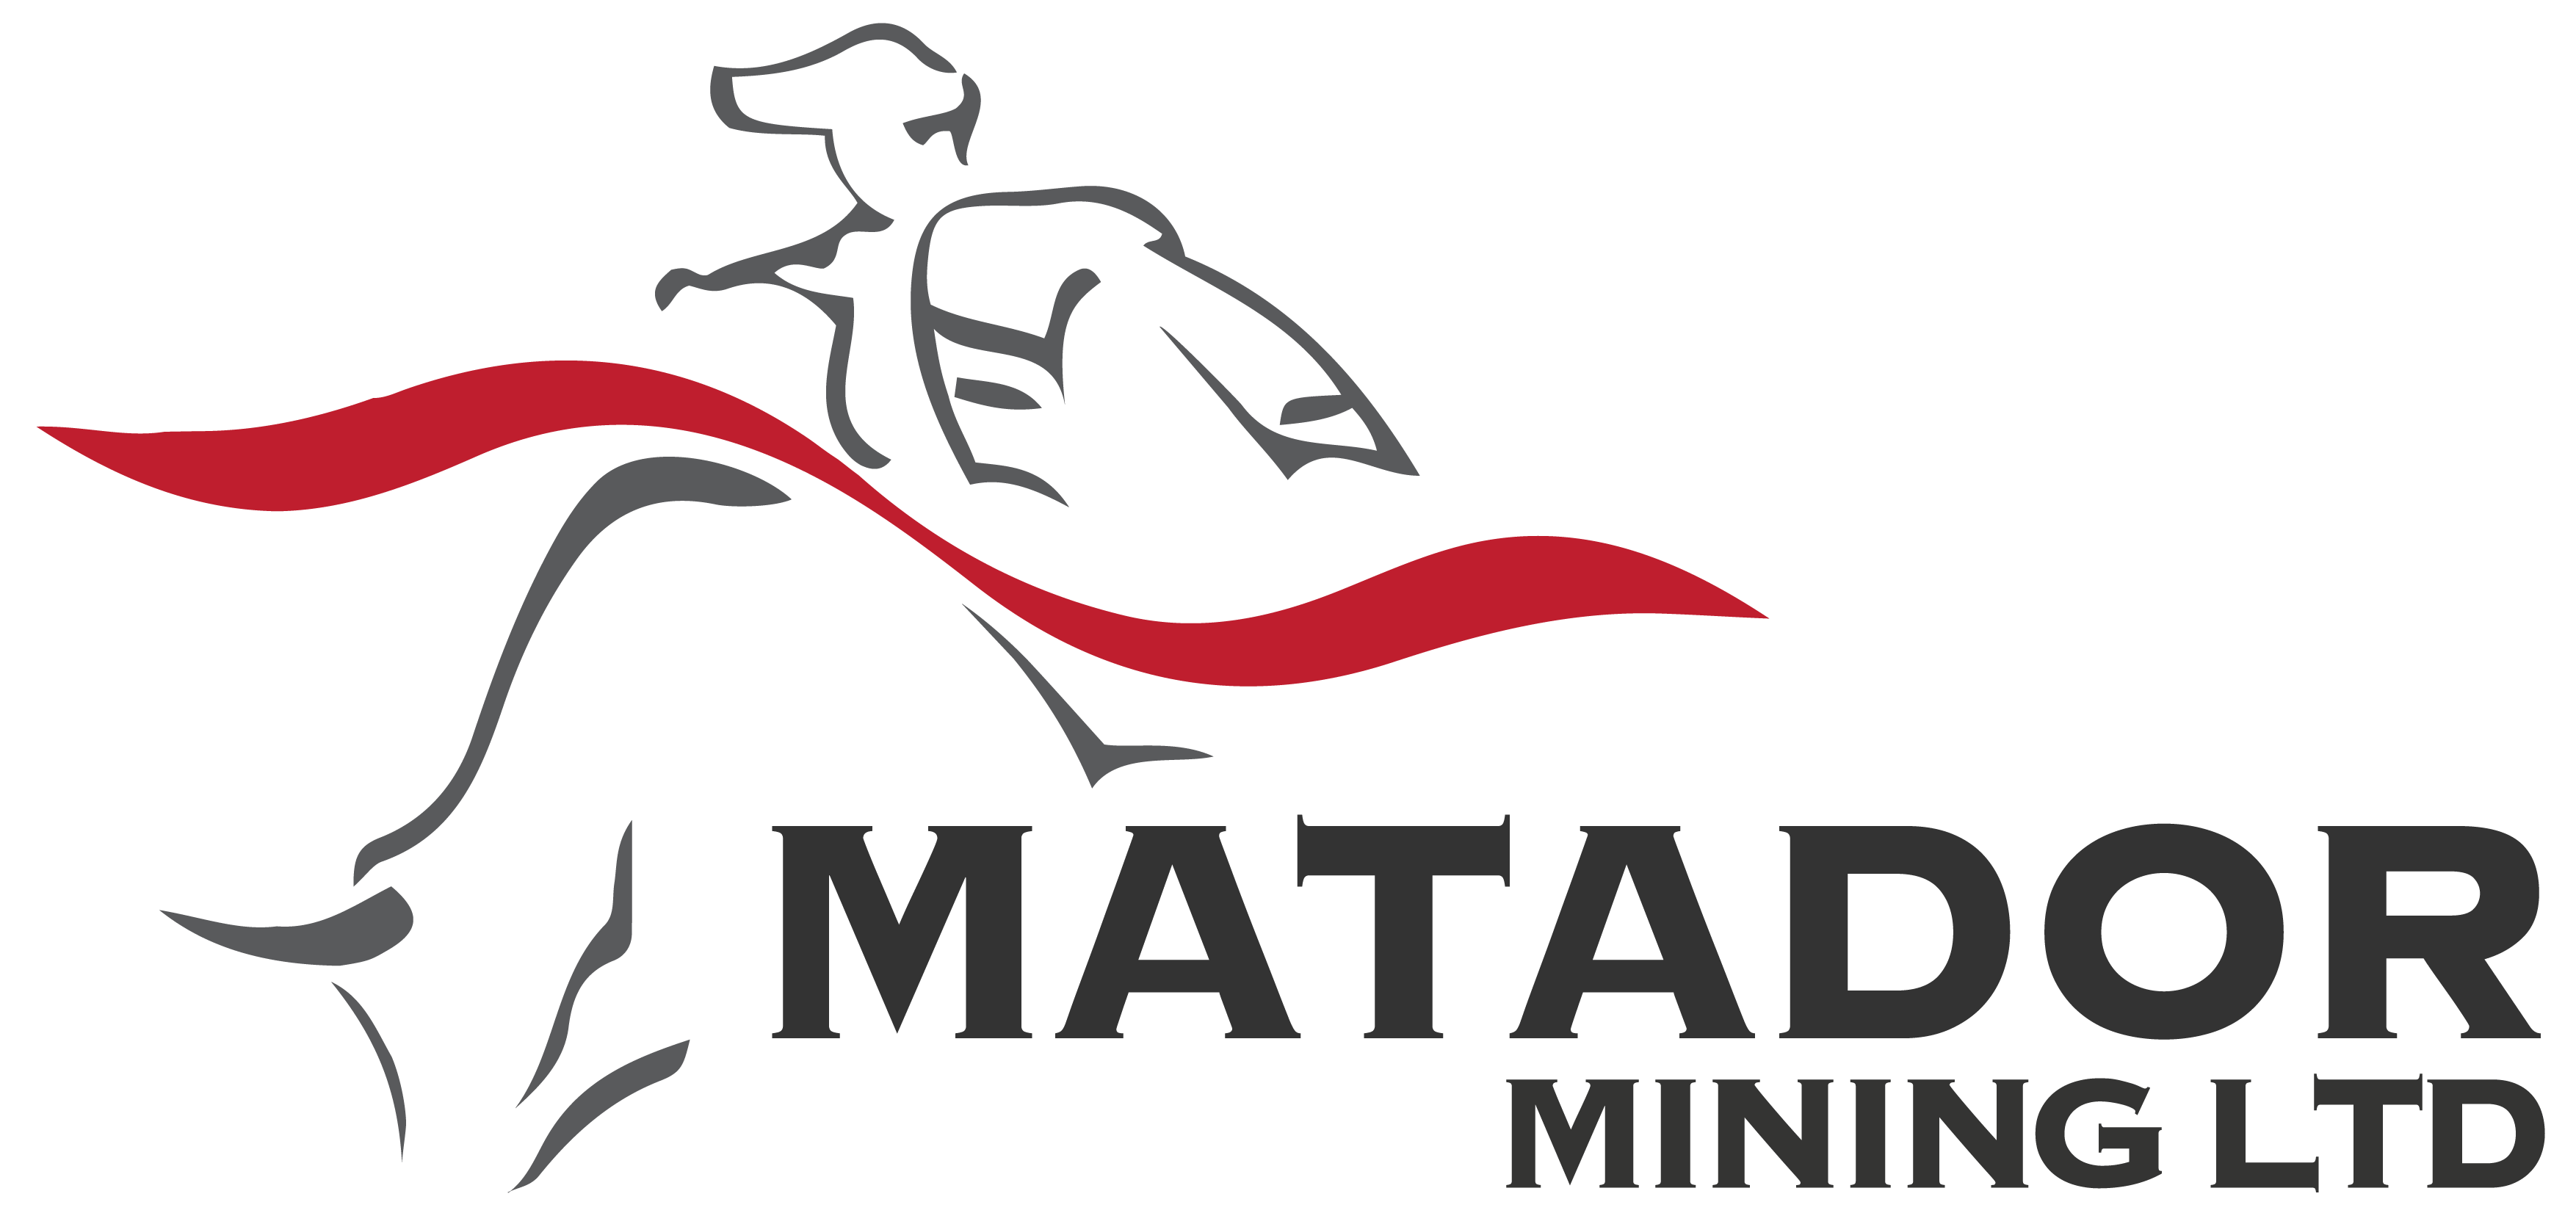 Matador Mining Limited Logo